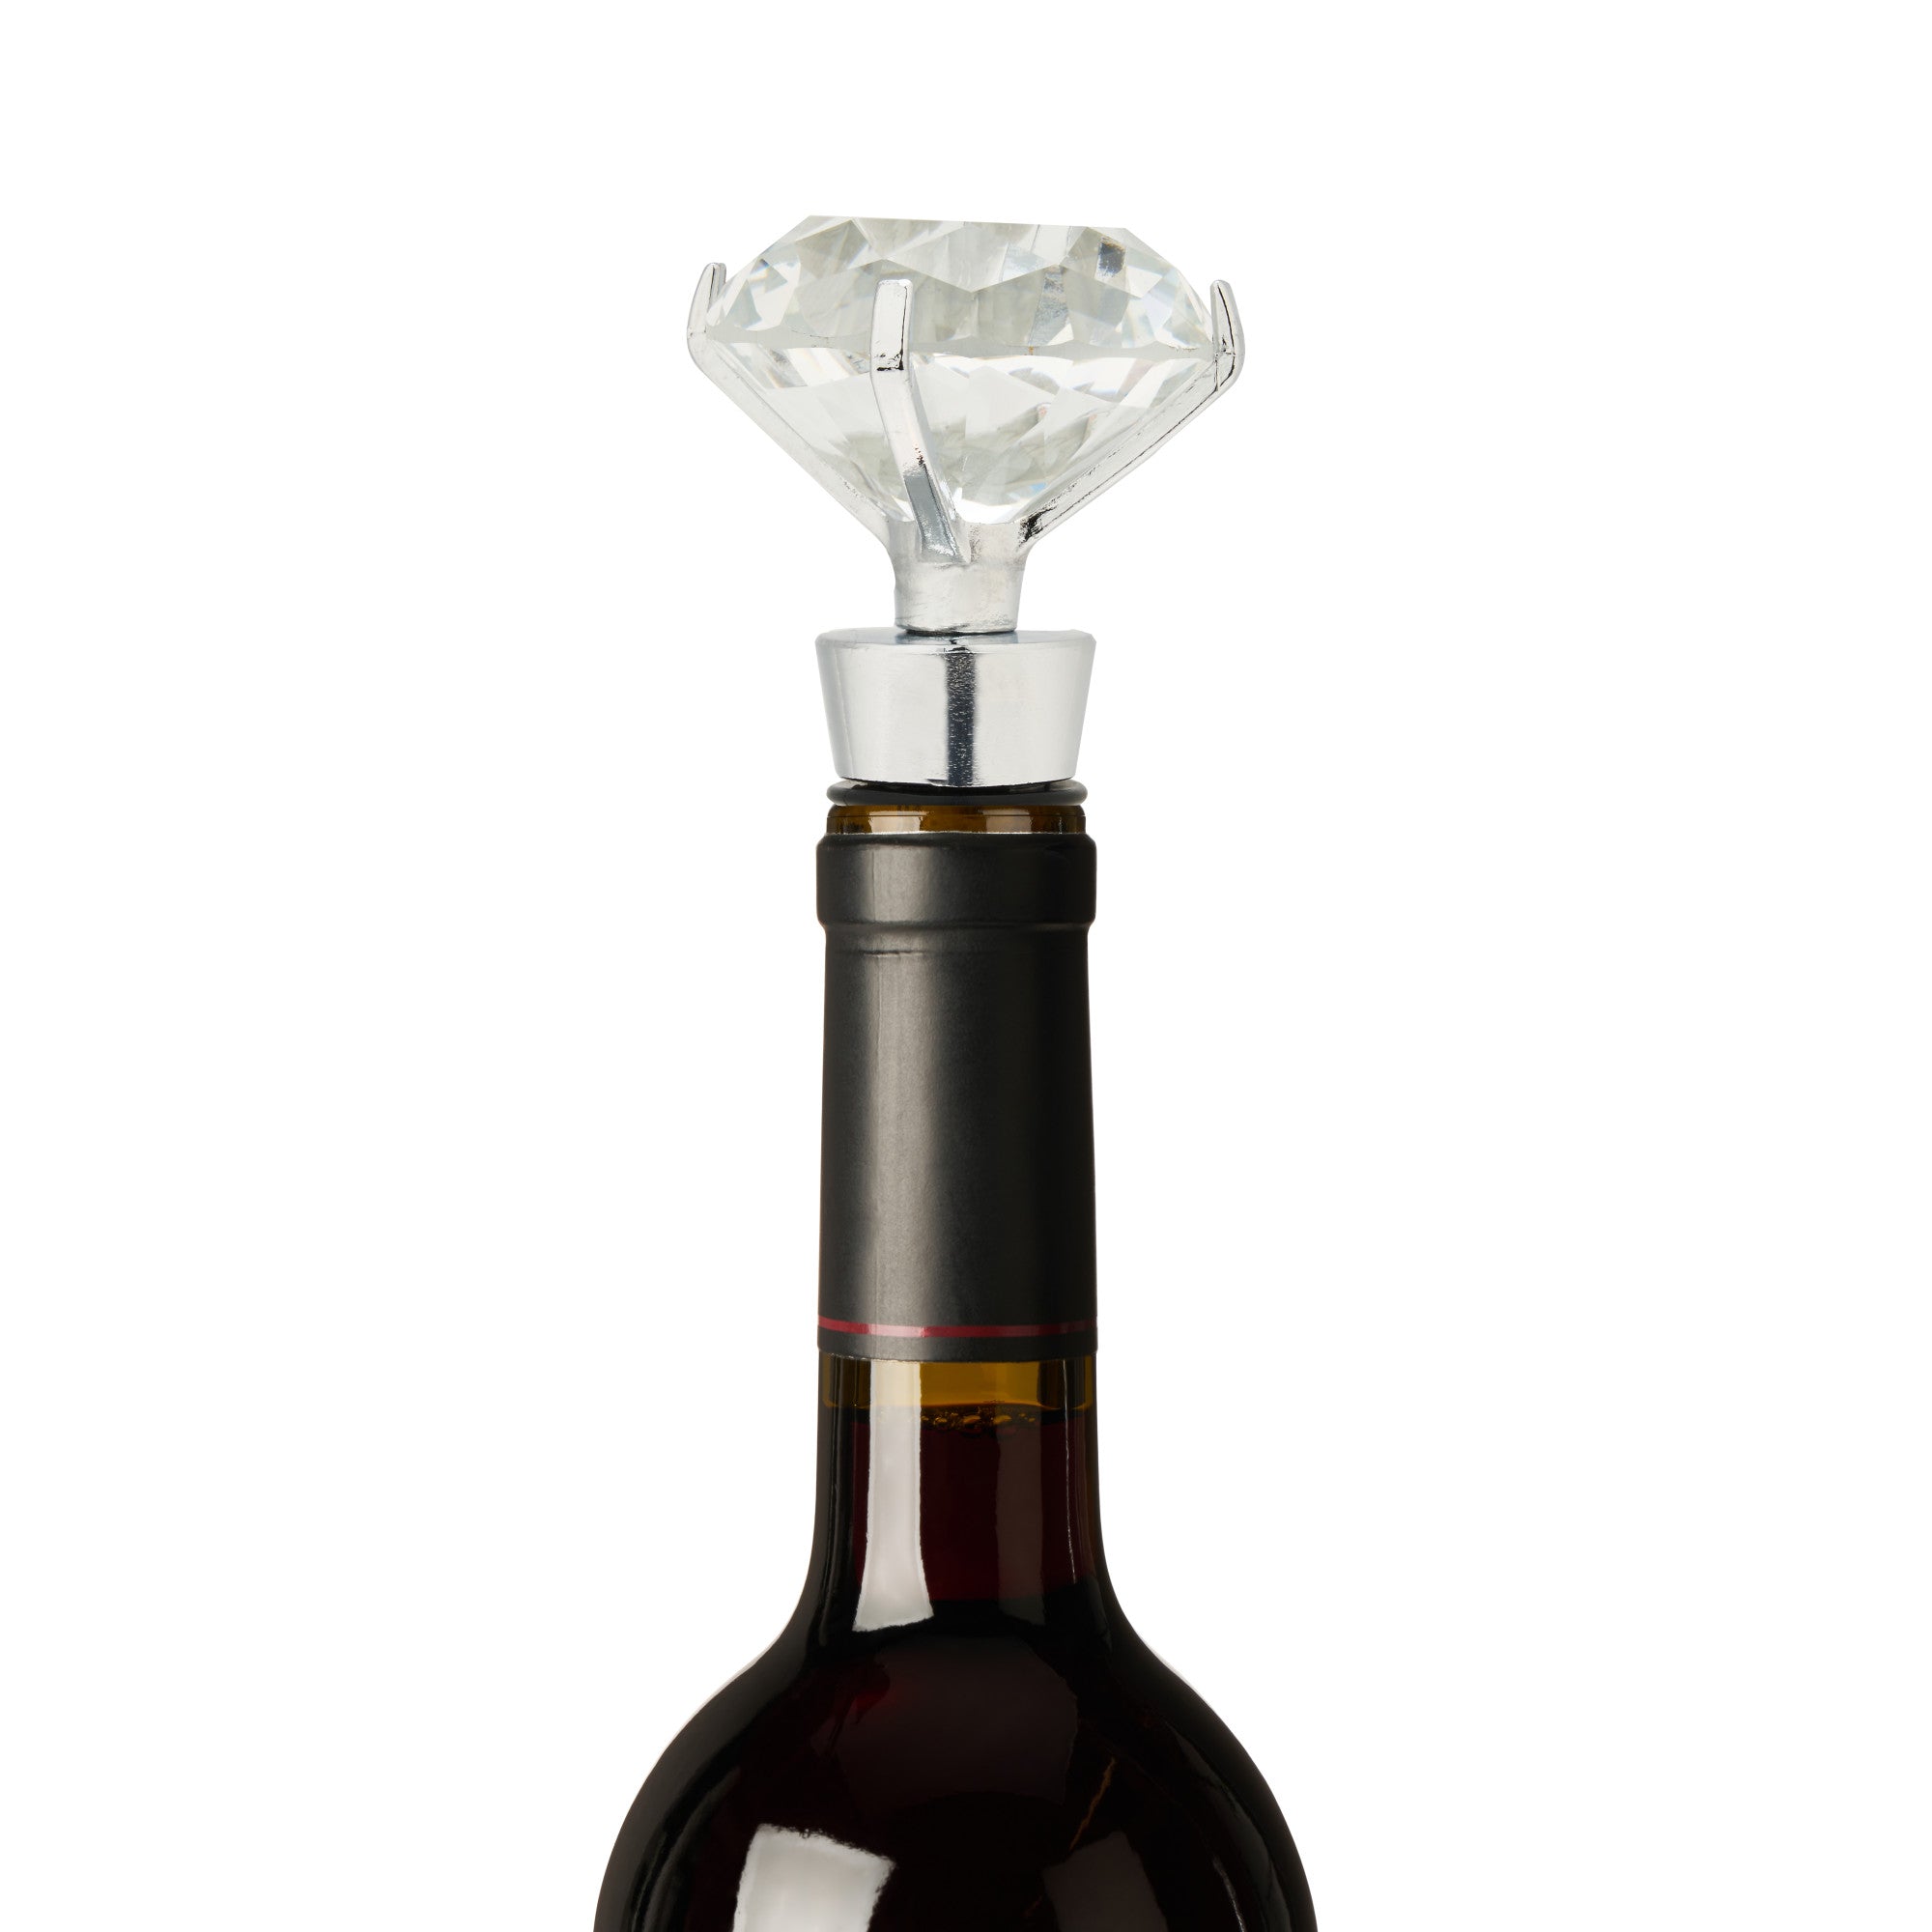 Diamond Ring Bottle Stopper by Blush (10155) Wine Accessories Blush